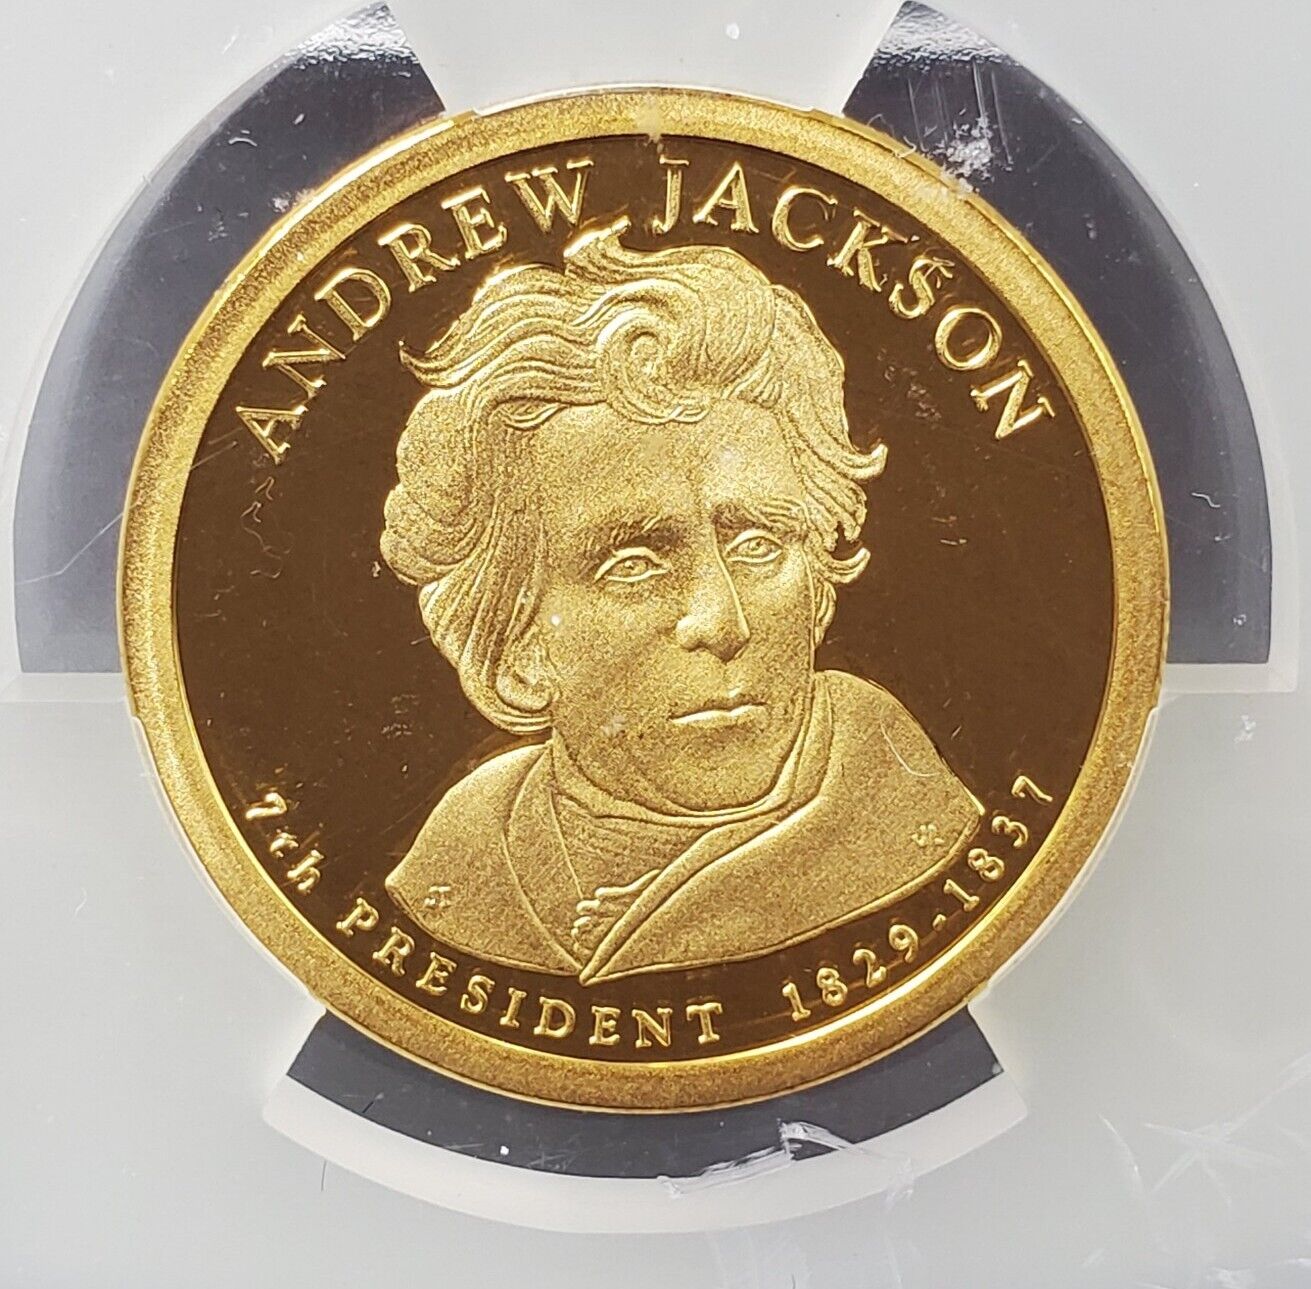 2008 S Andrew Jackson Presidential Dollar Coin ICG PF70 DCAM